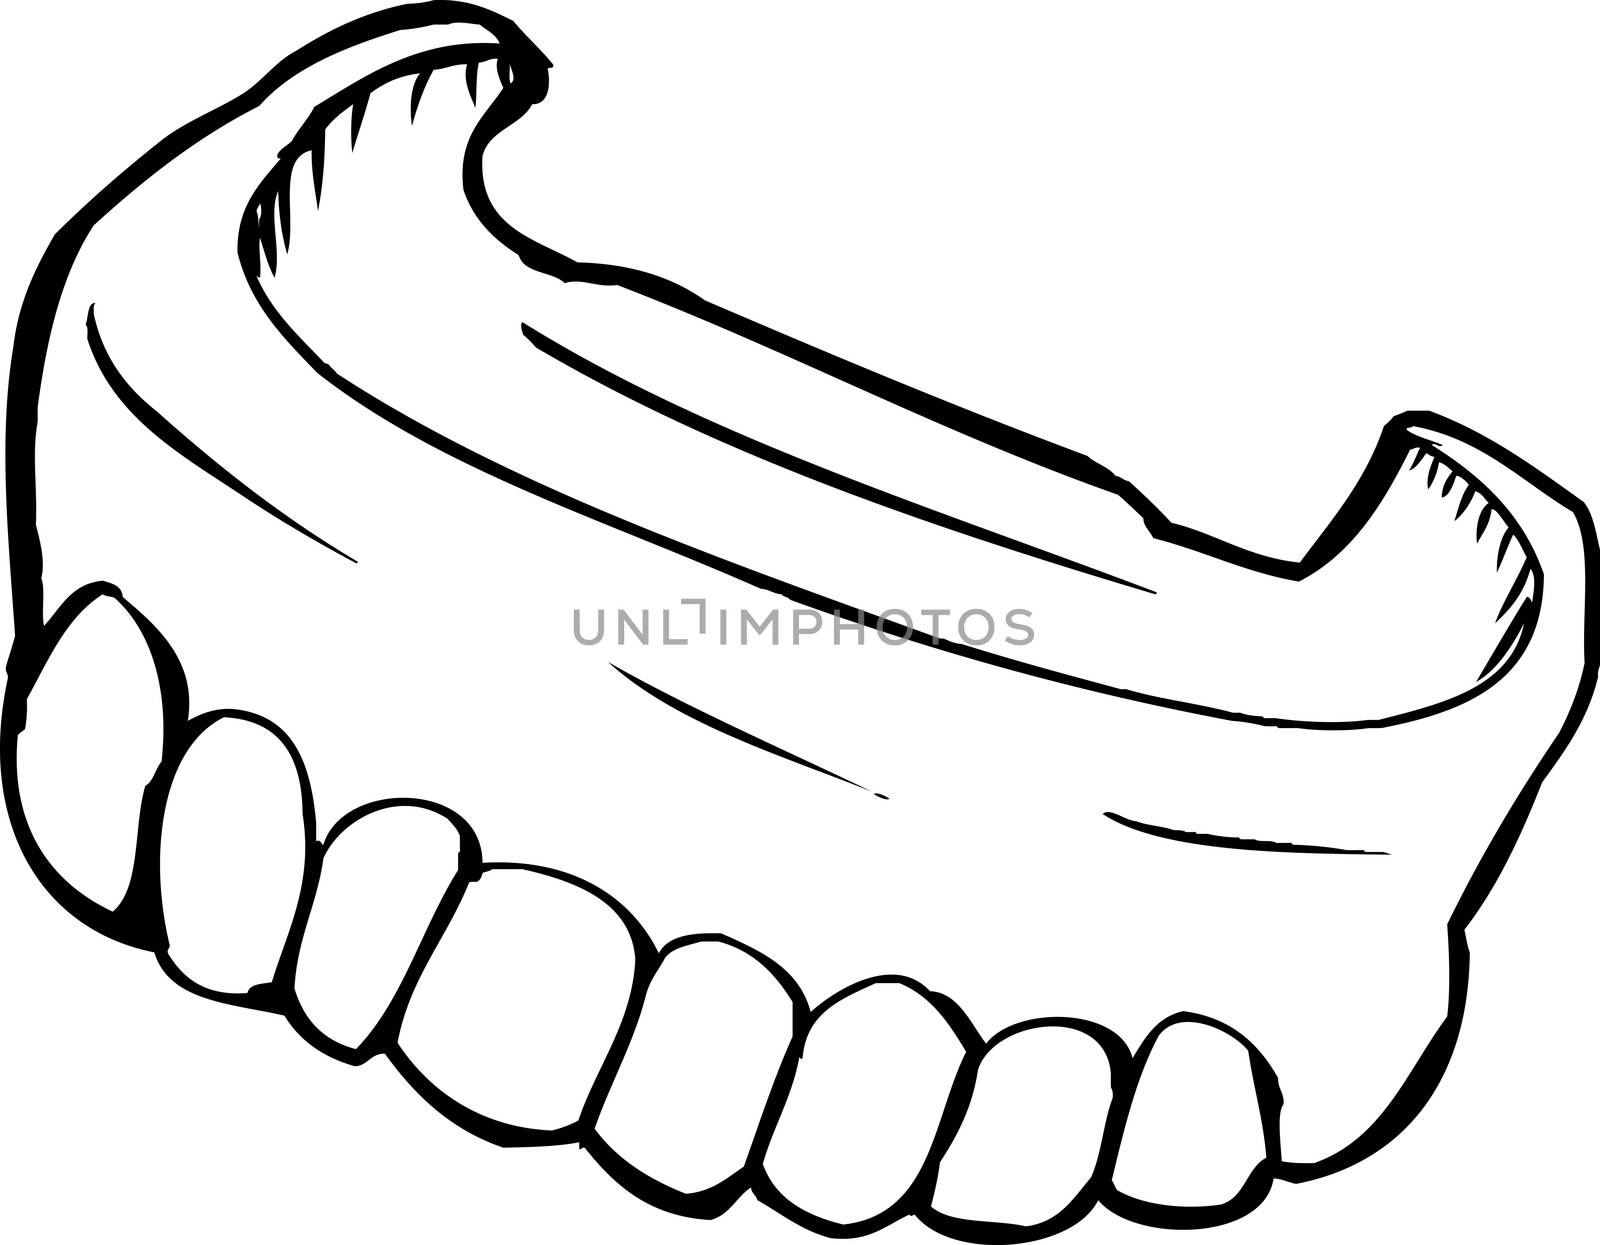 Close up outlined illustration of dentures over white